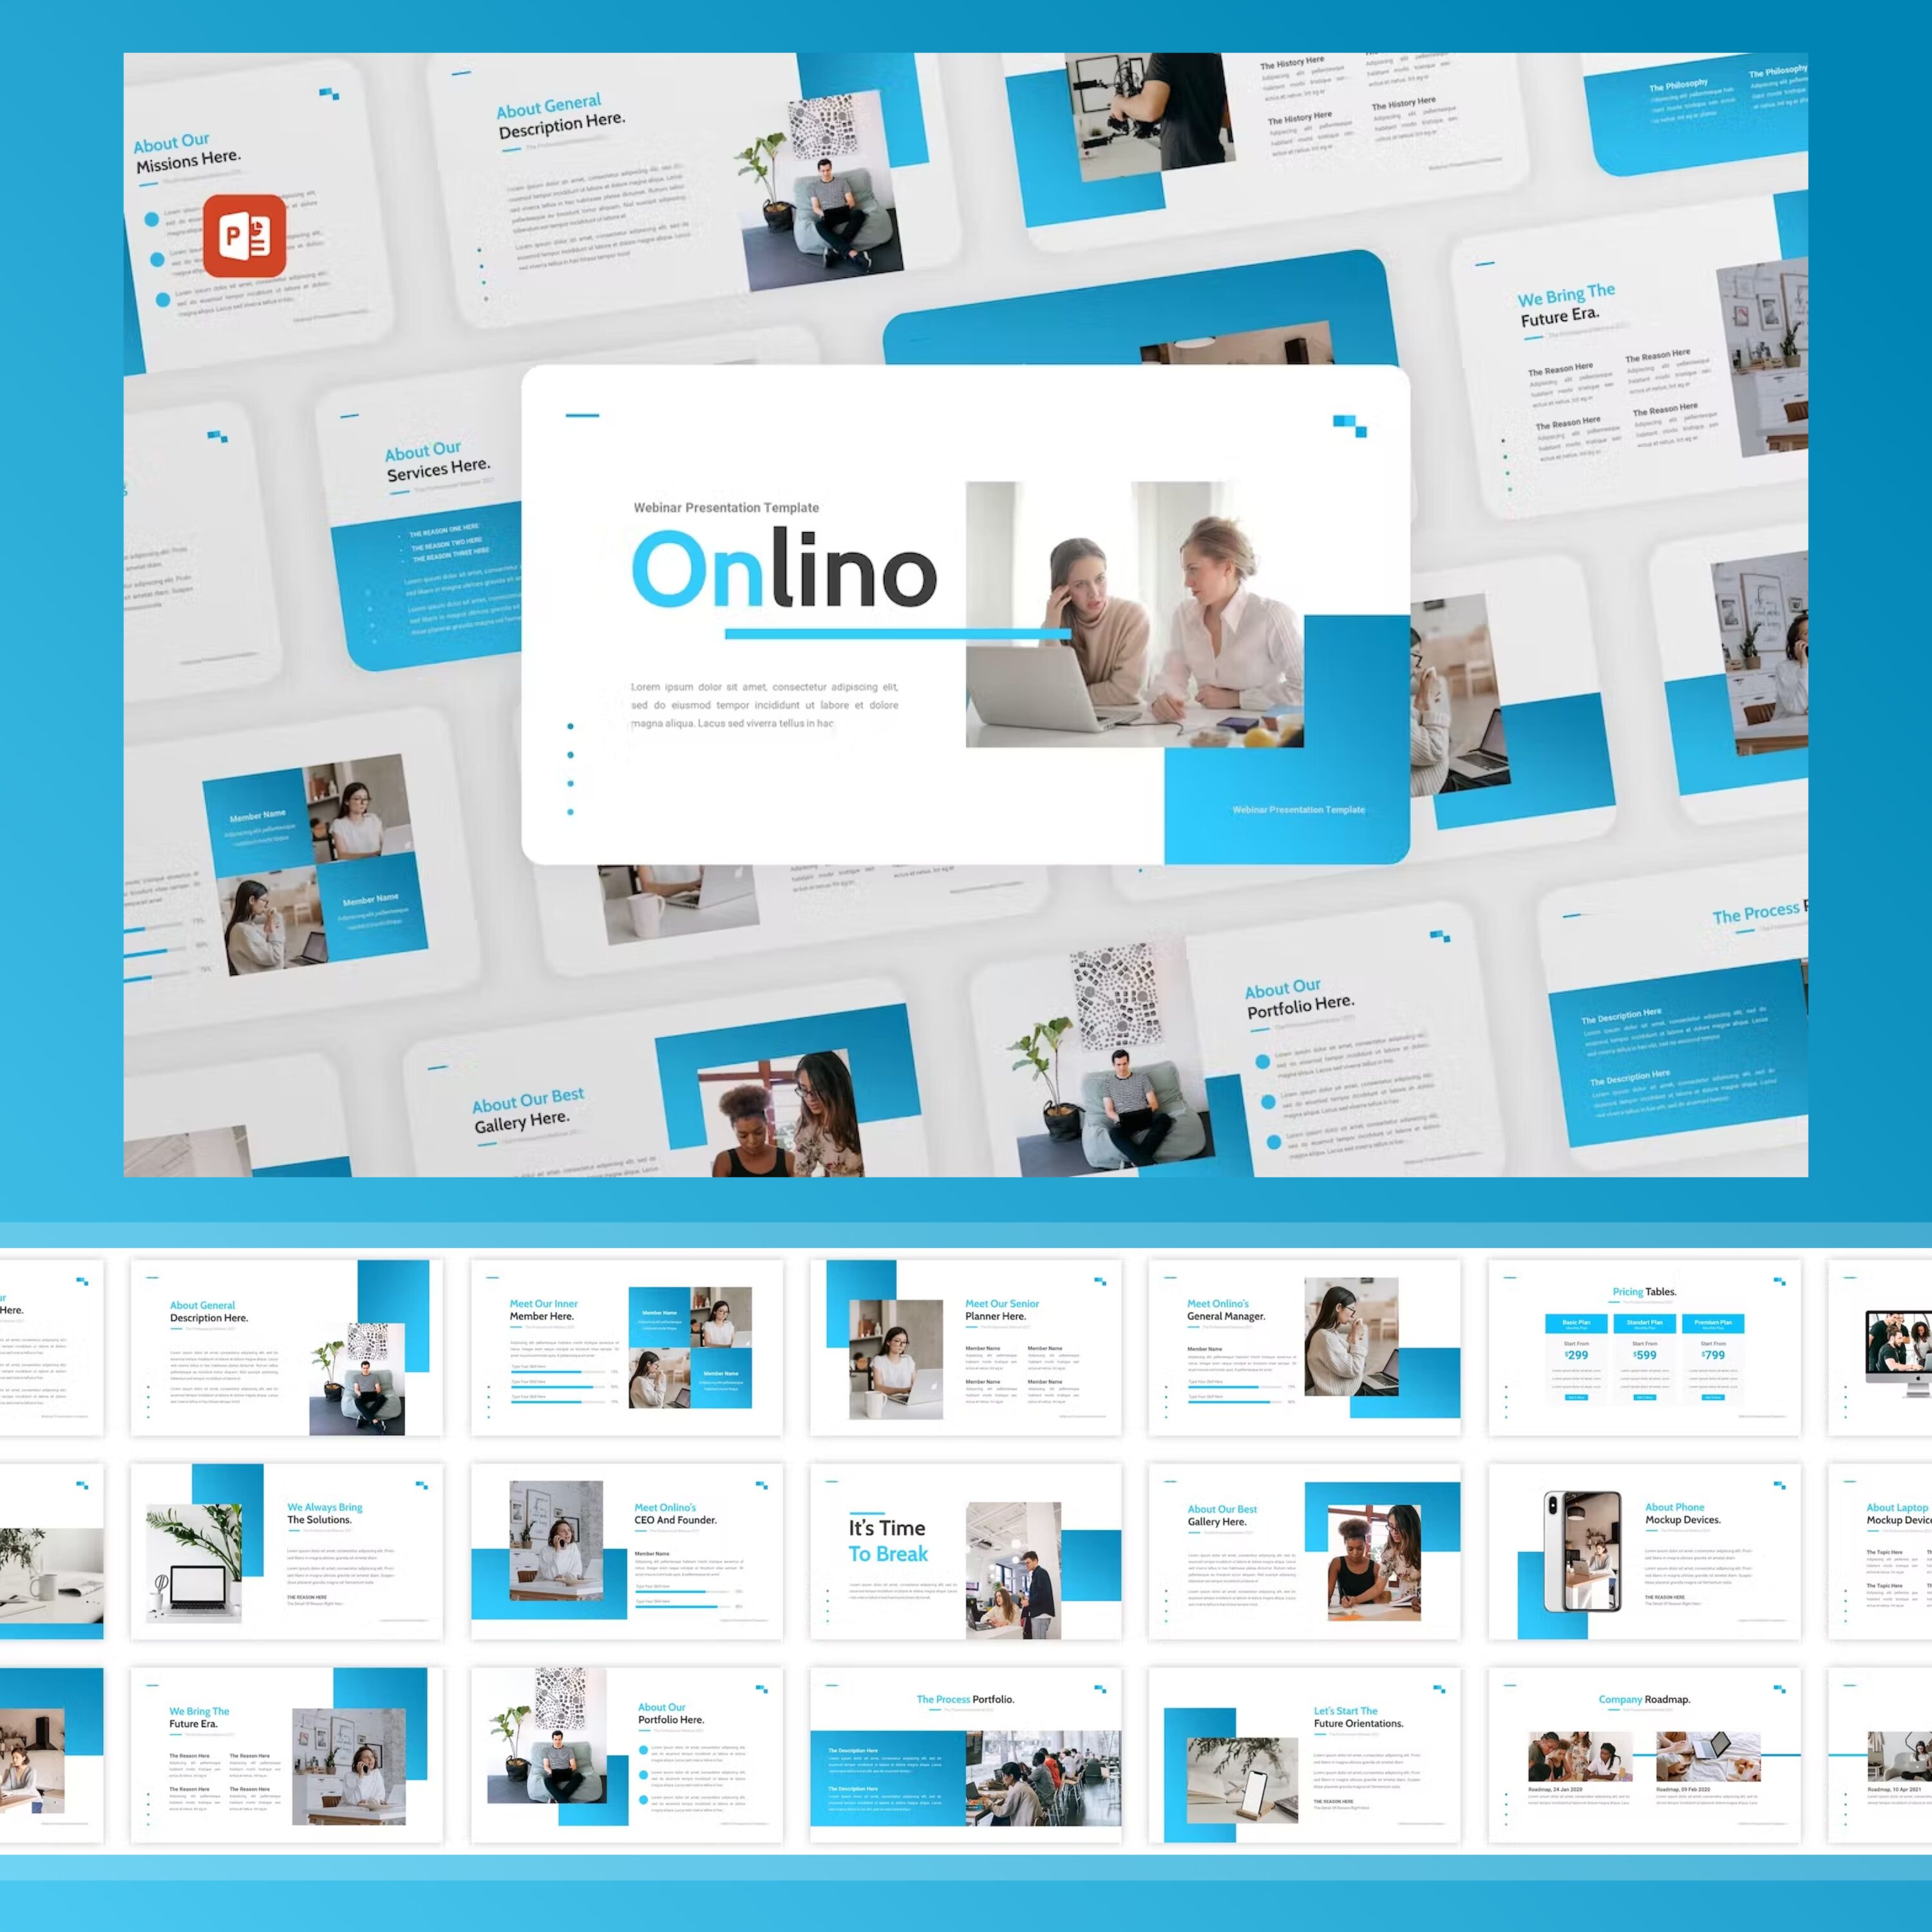 Onlino Webinar Business PowerPoint Template from puricreative.